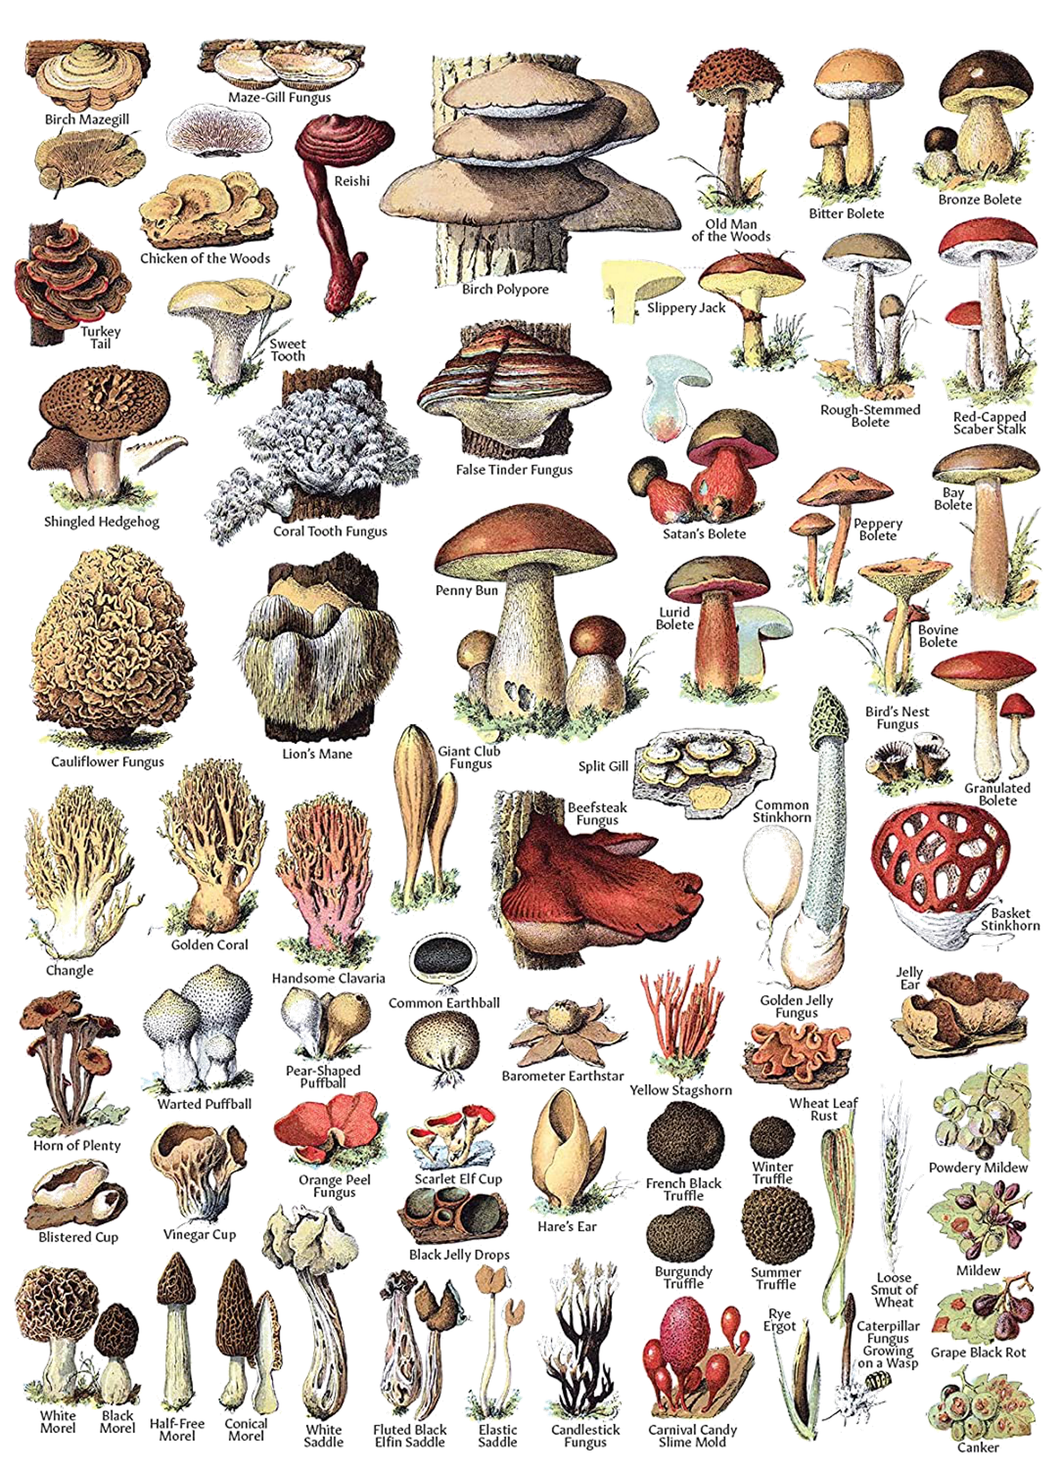 Mushroom Friends